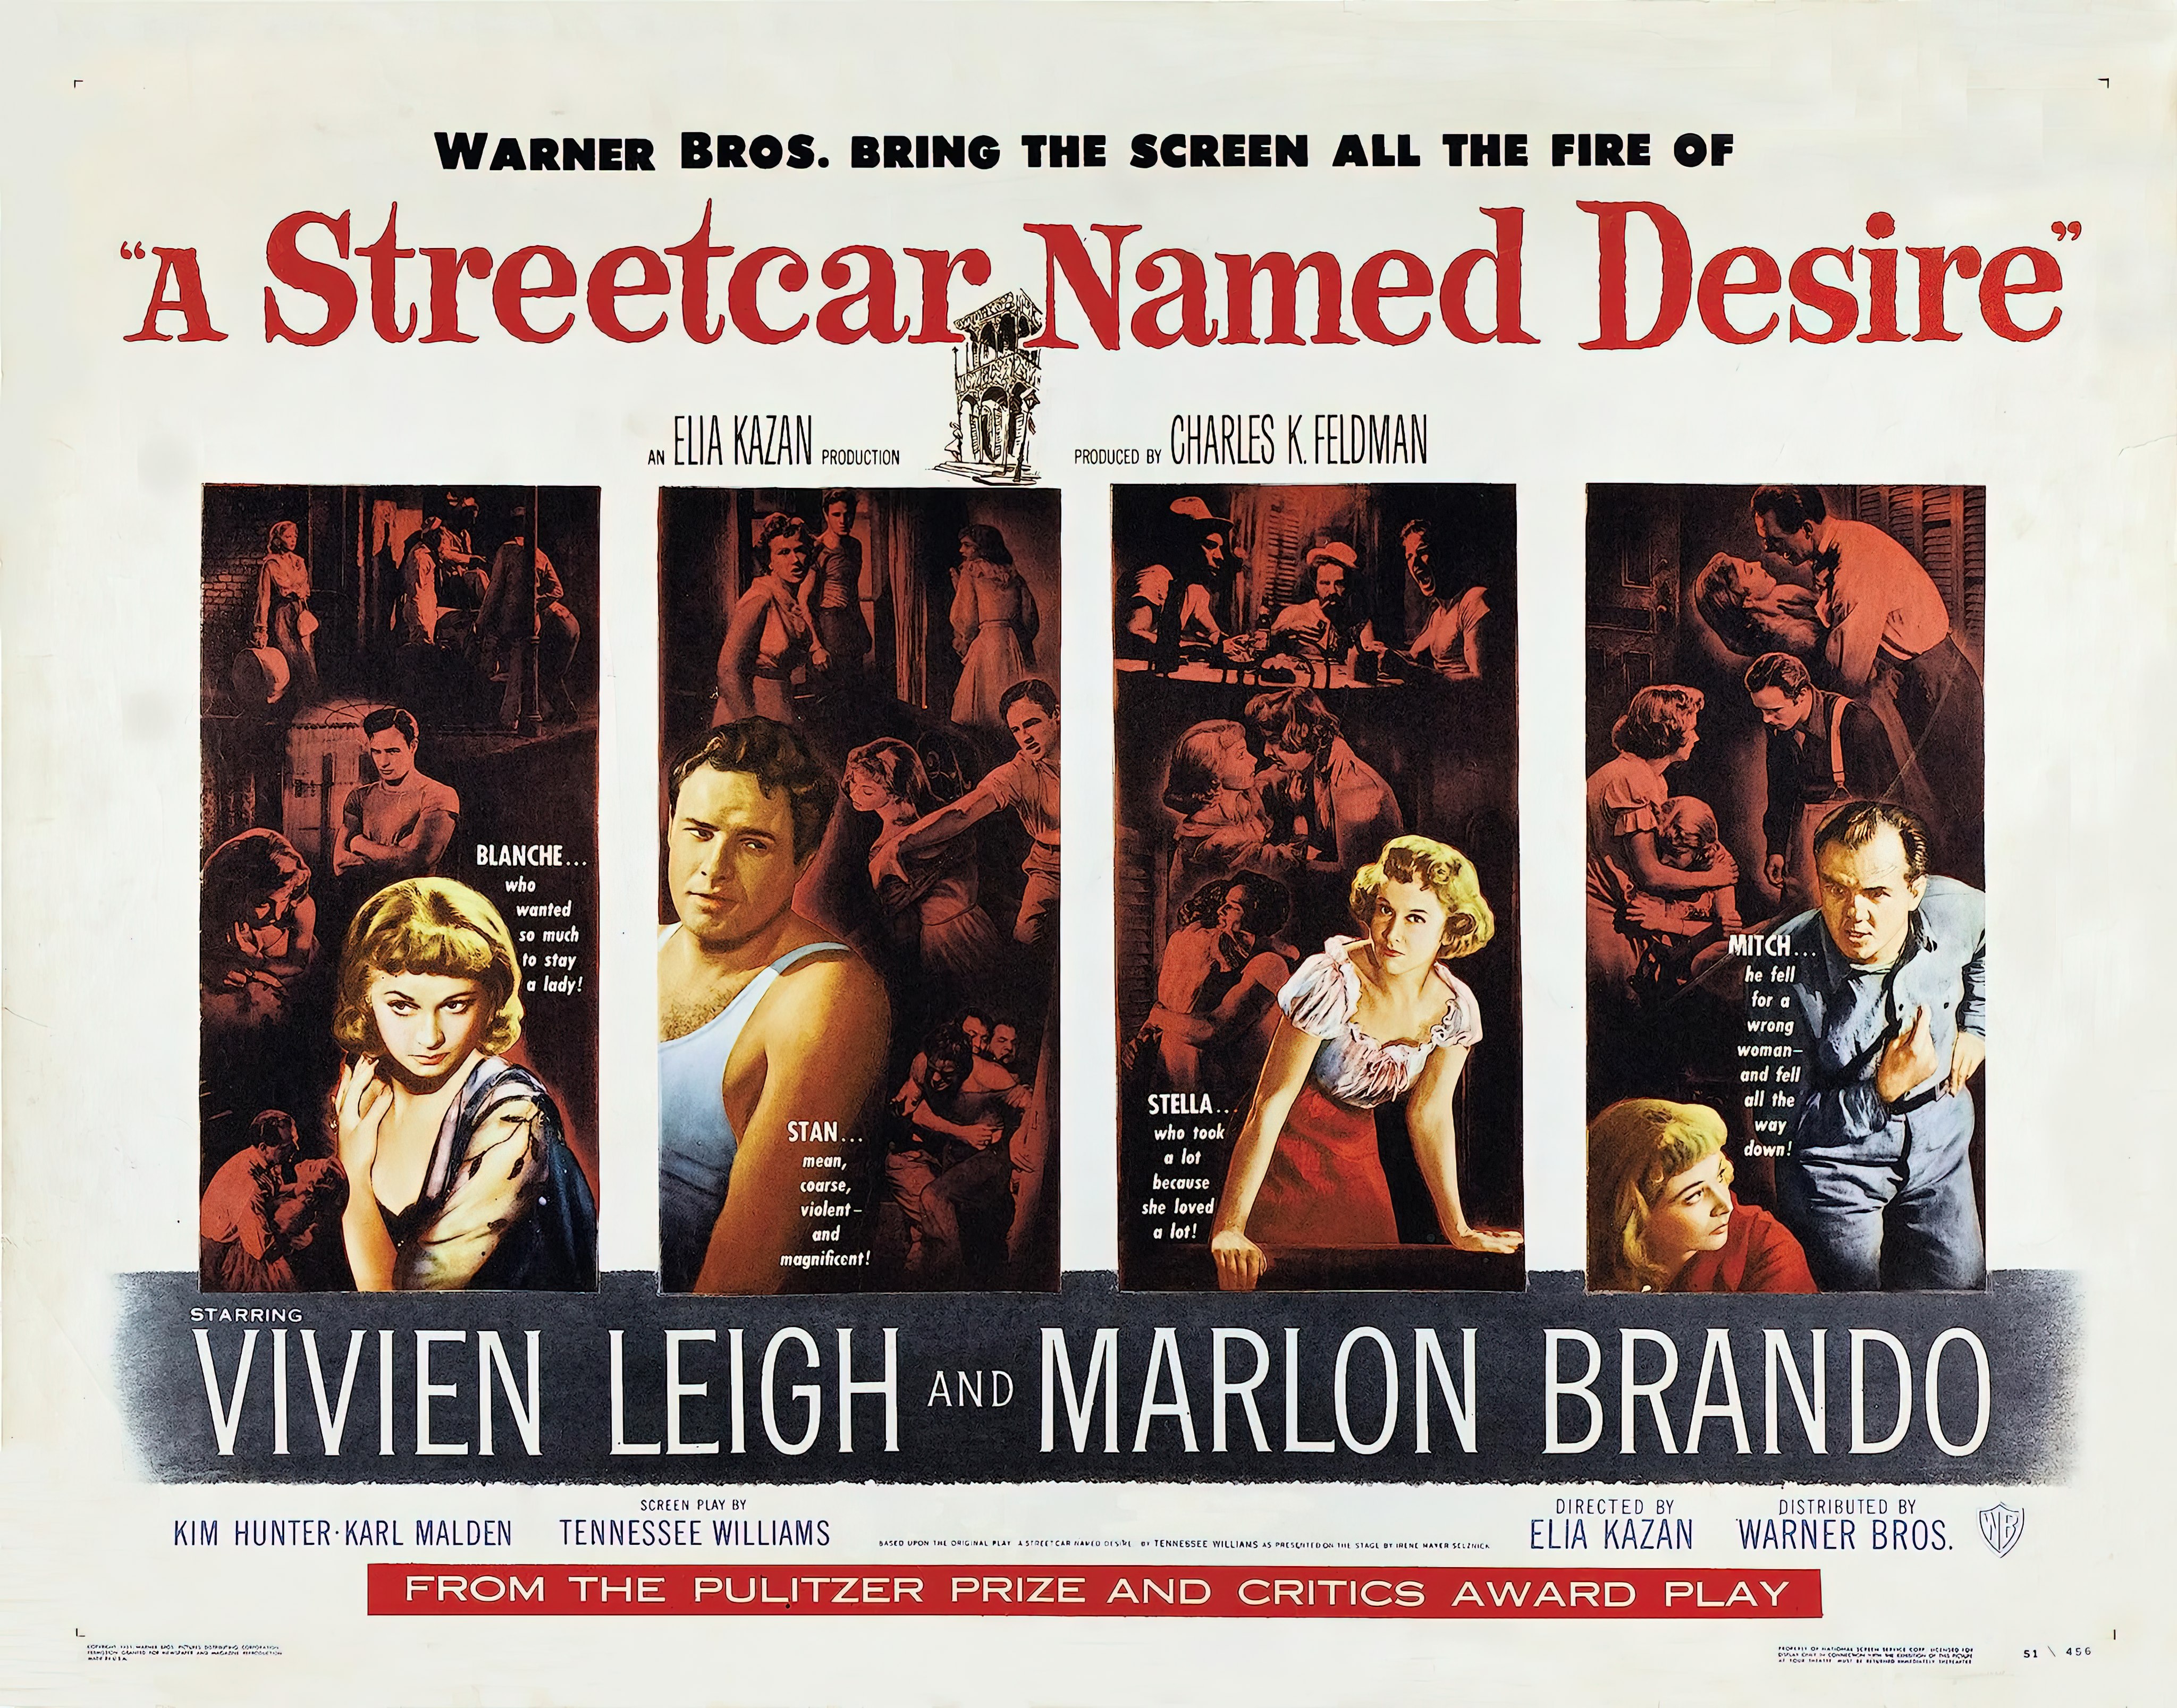 A Streetcar Named Desire (1951) รถรางคันนั้นชื่อปรารถนา